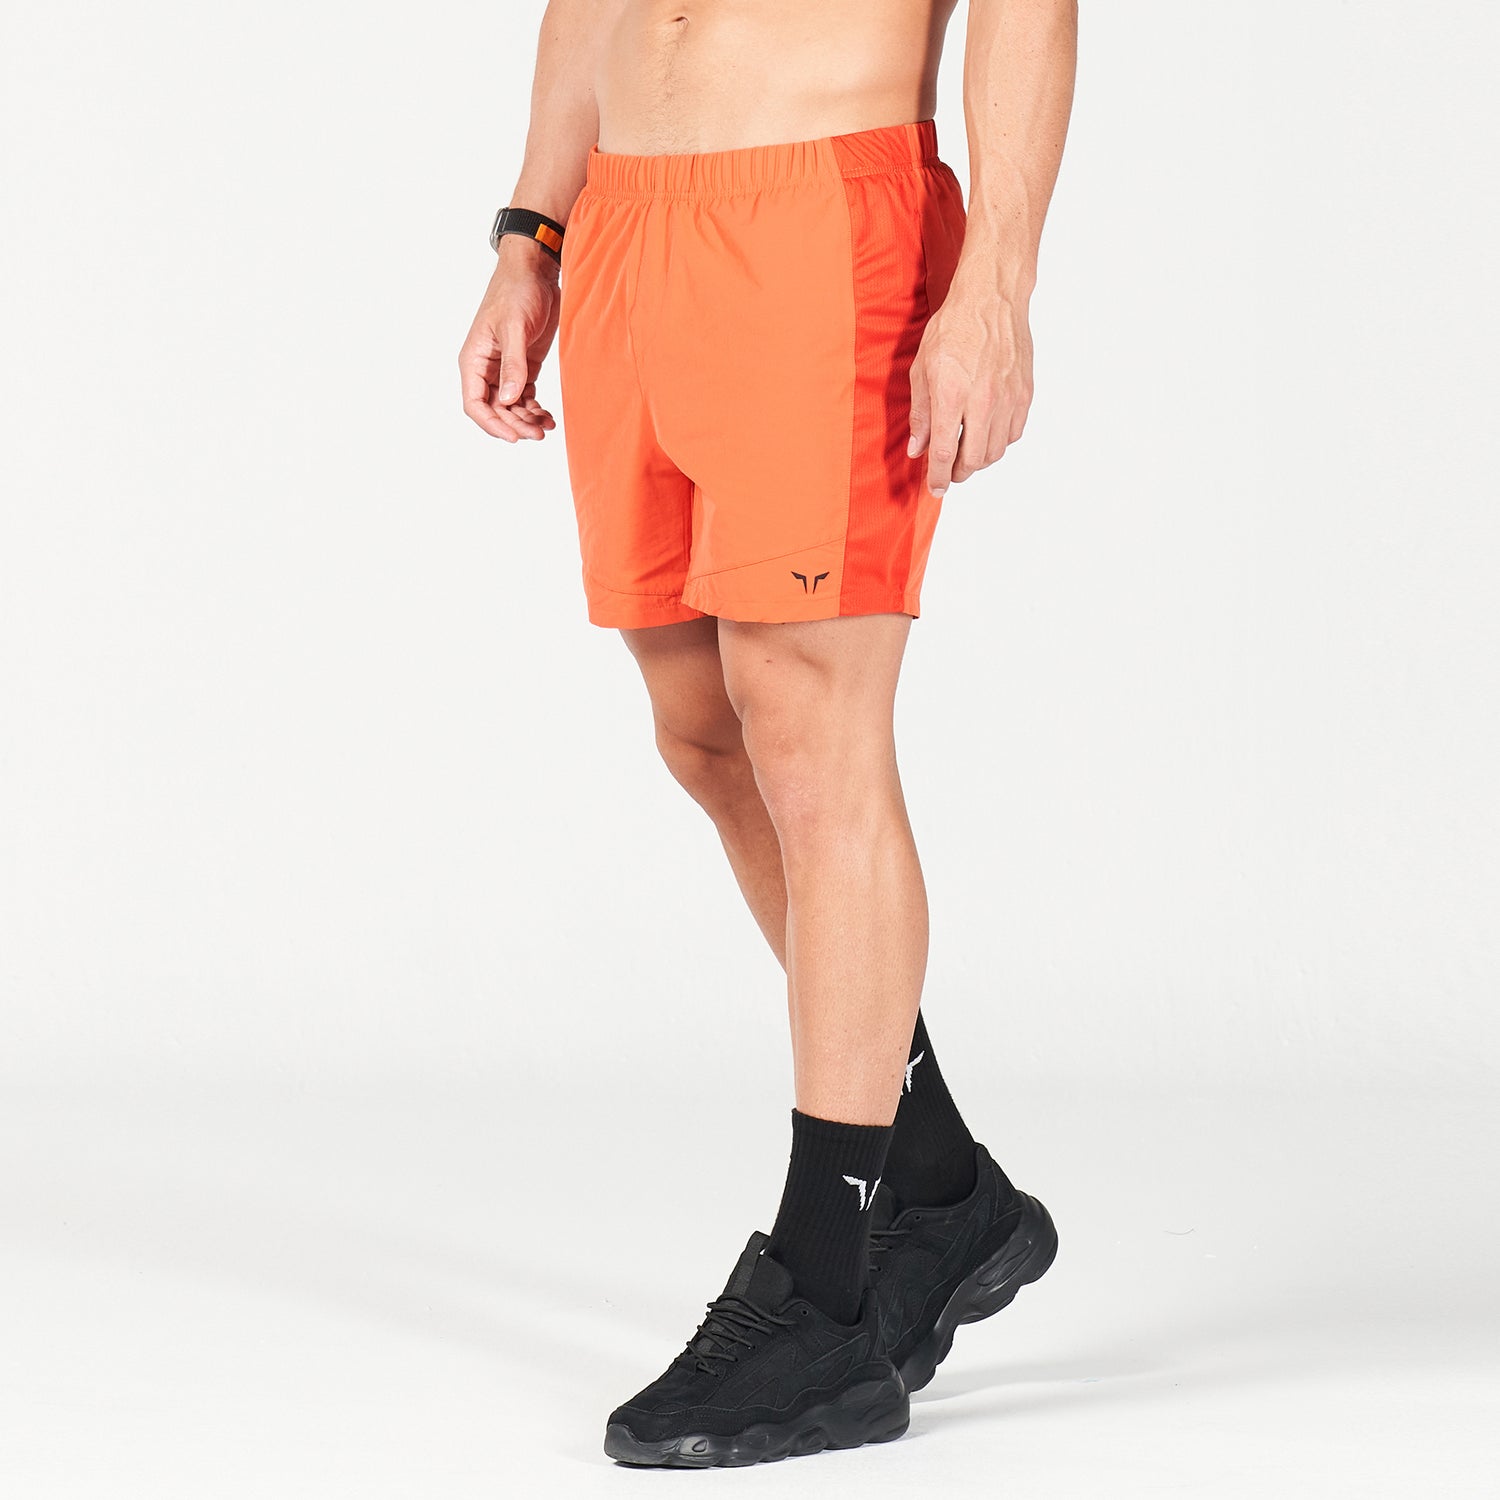 squatwolf-gym-wear-statement-quick-dry-shorts-paprika-workout-short-for-men